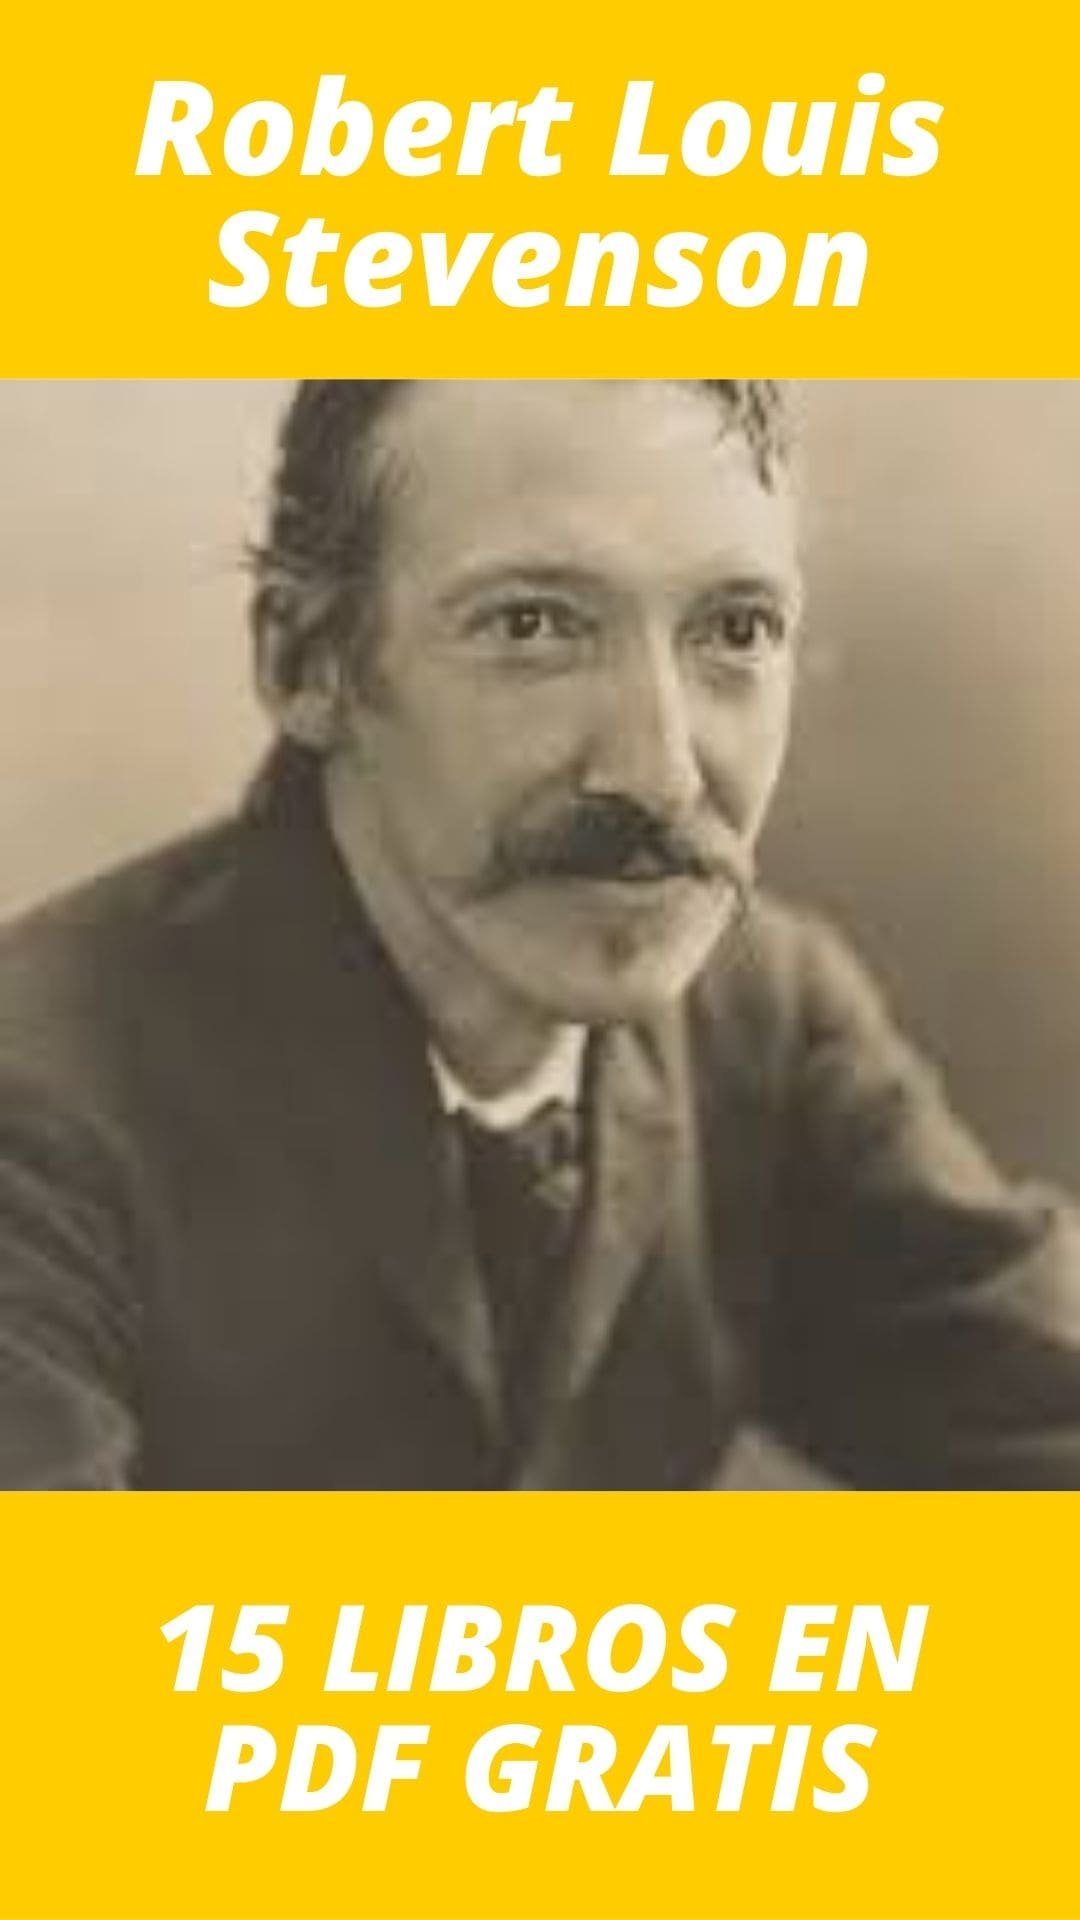 Libros de Robert Louis Stevenson gratis en pdf